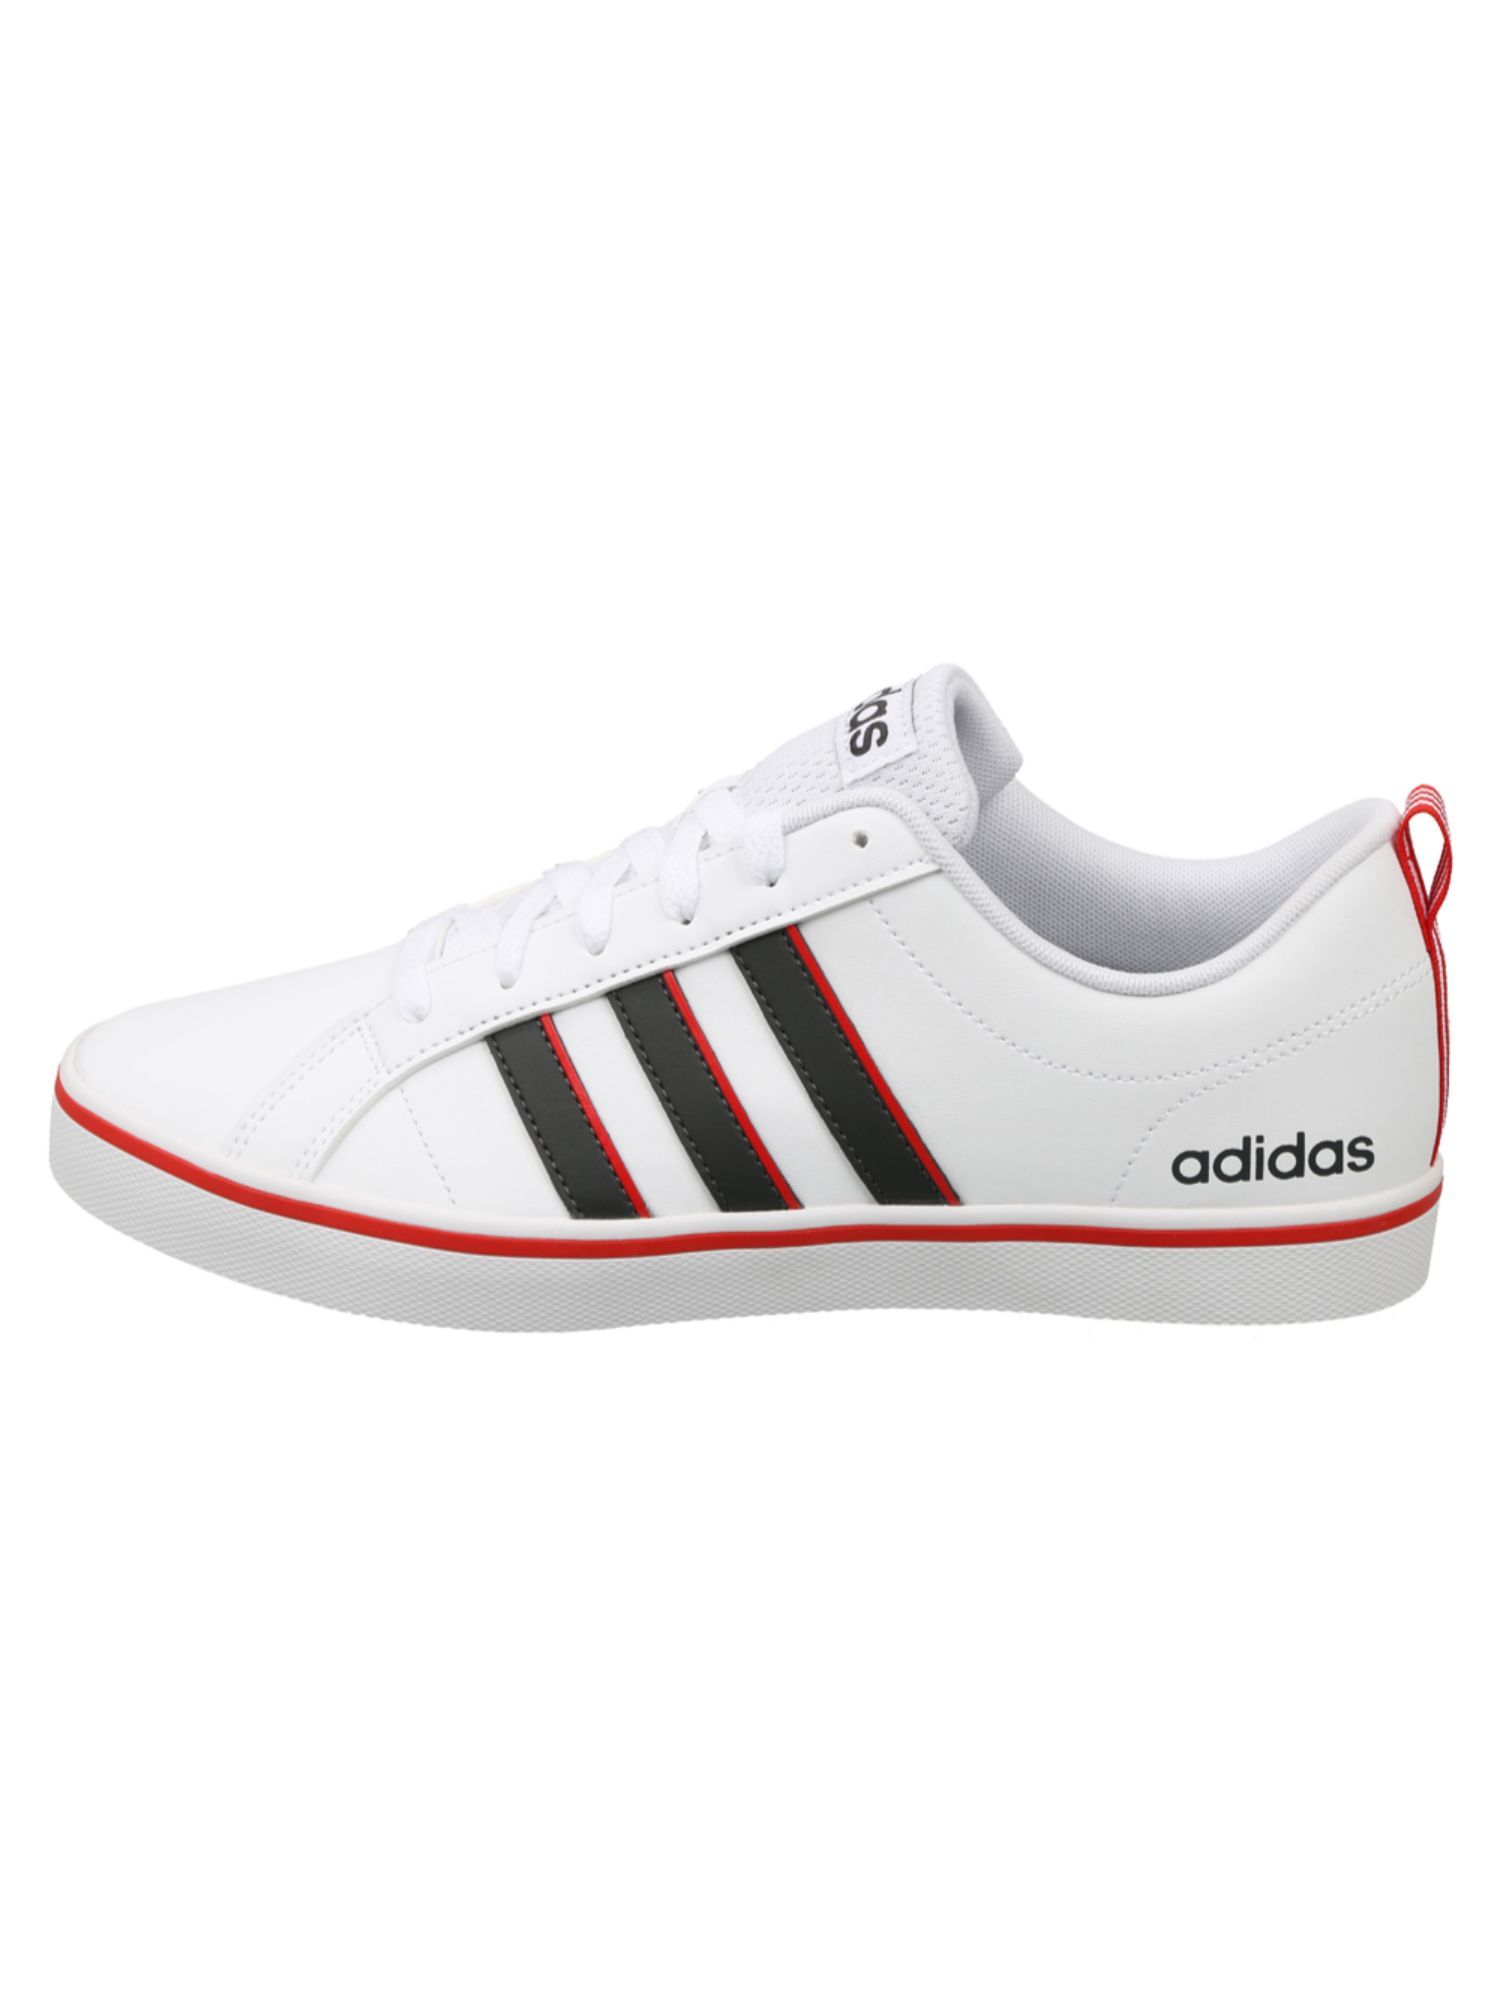 adidas VS Pace 2.0 3-Stripes Branding Nubuck Men's Shoes Sneakers HP6004 |  eBay